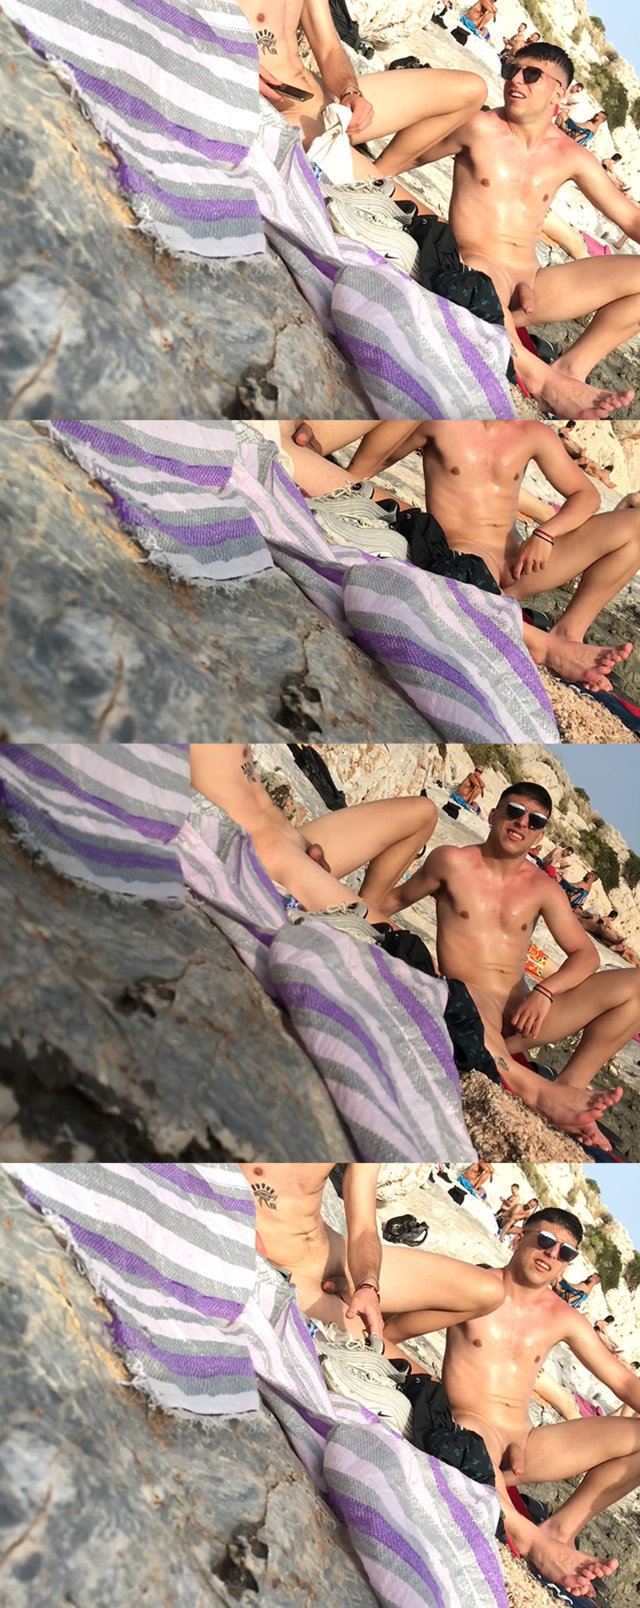 uncut guy gets a boner at the nudist beach